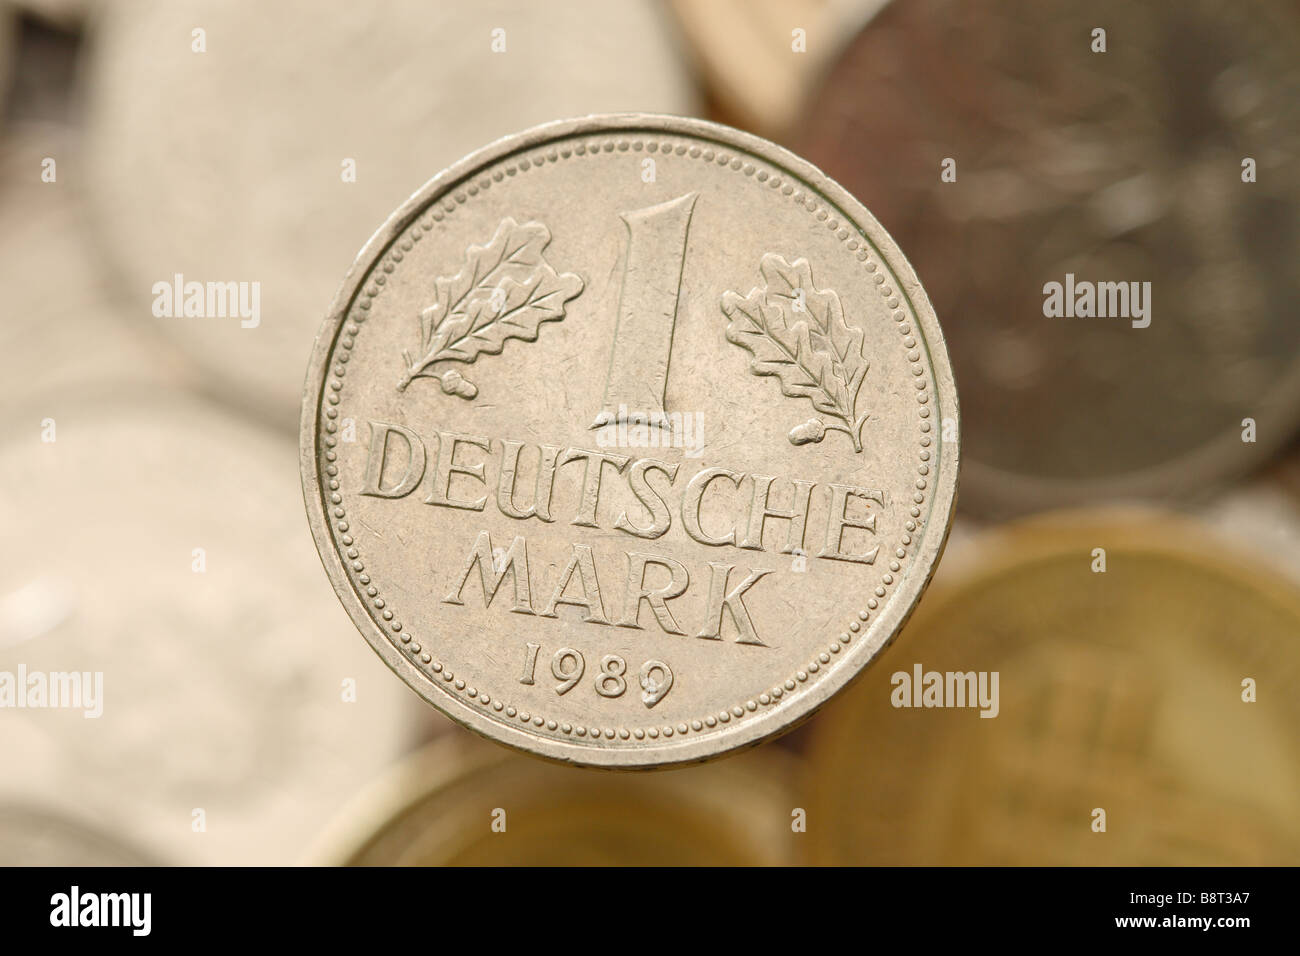 German 1 Deutsche Mark coin money cash former currency of Germany Stock Photo